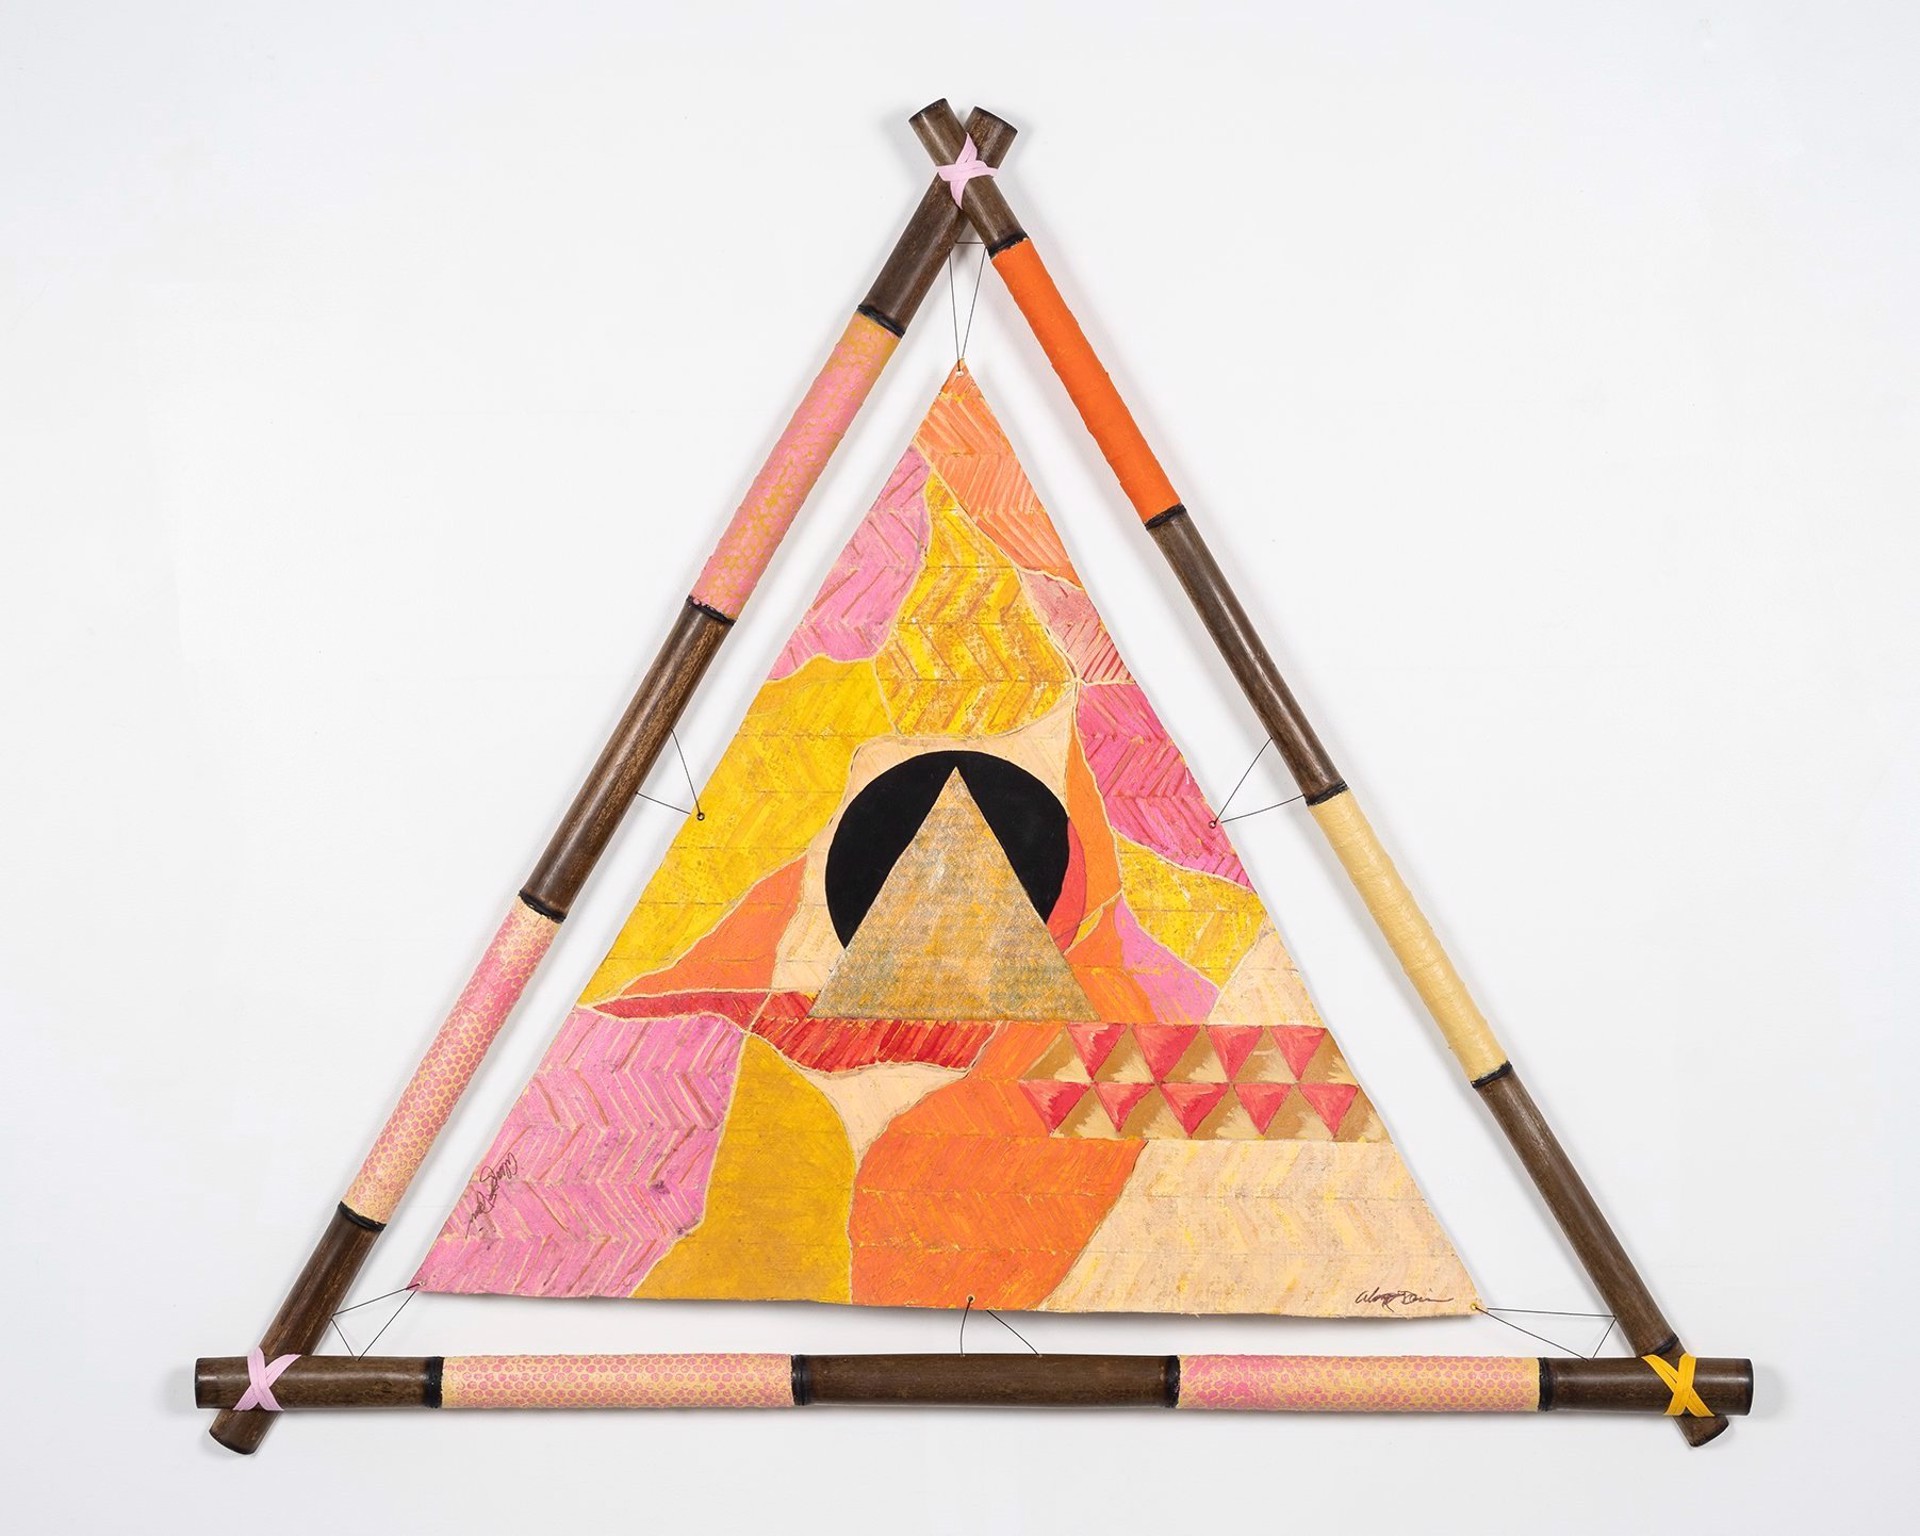 Suspended Pyramid #2 by Alonzo Davis